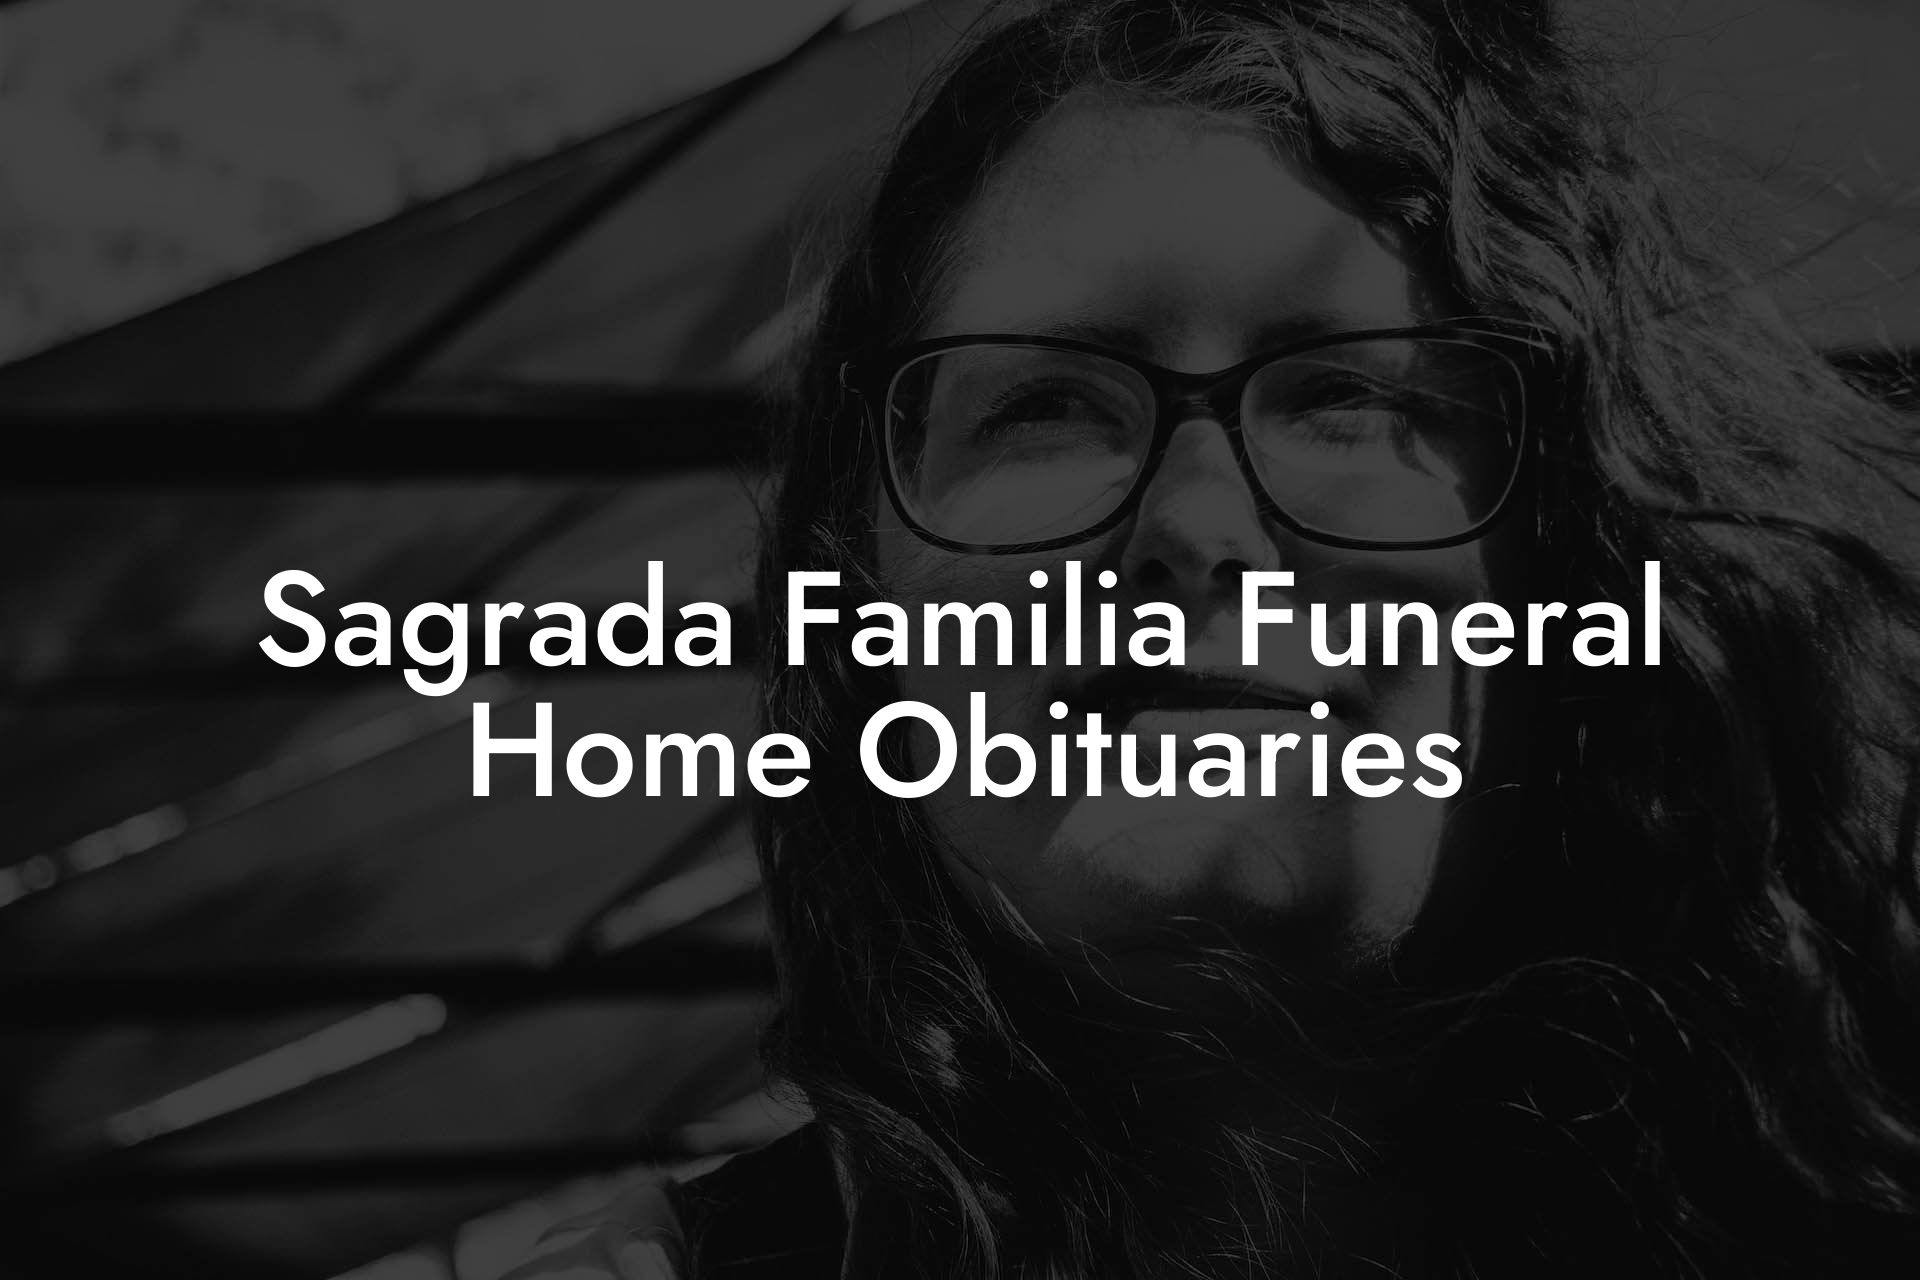 Sagrada Familia Funeral Home Obituaries